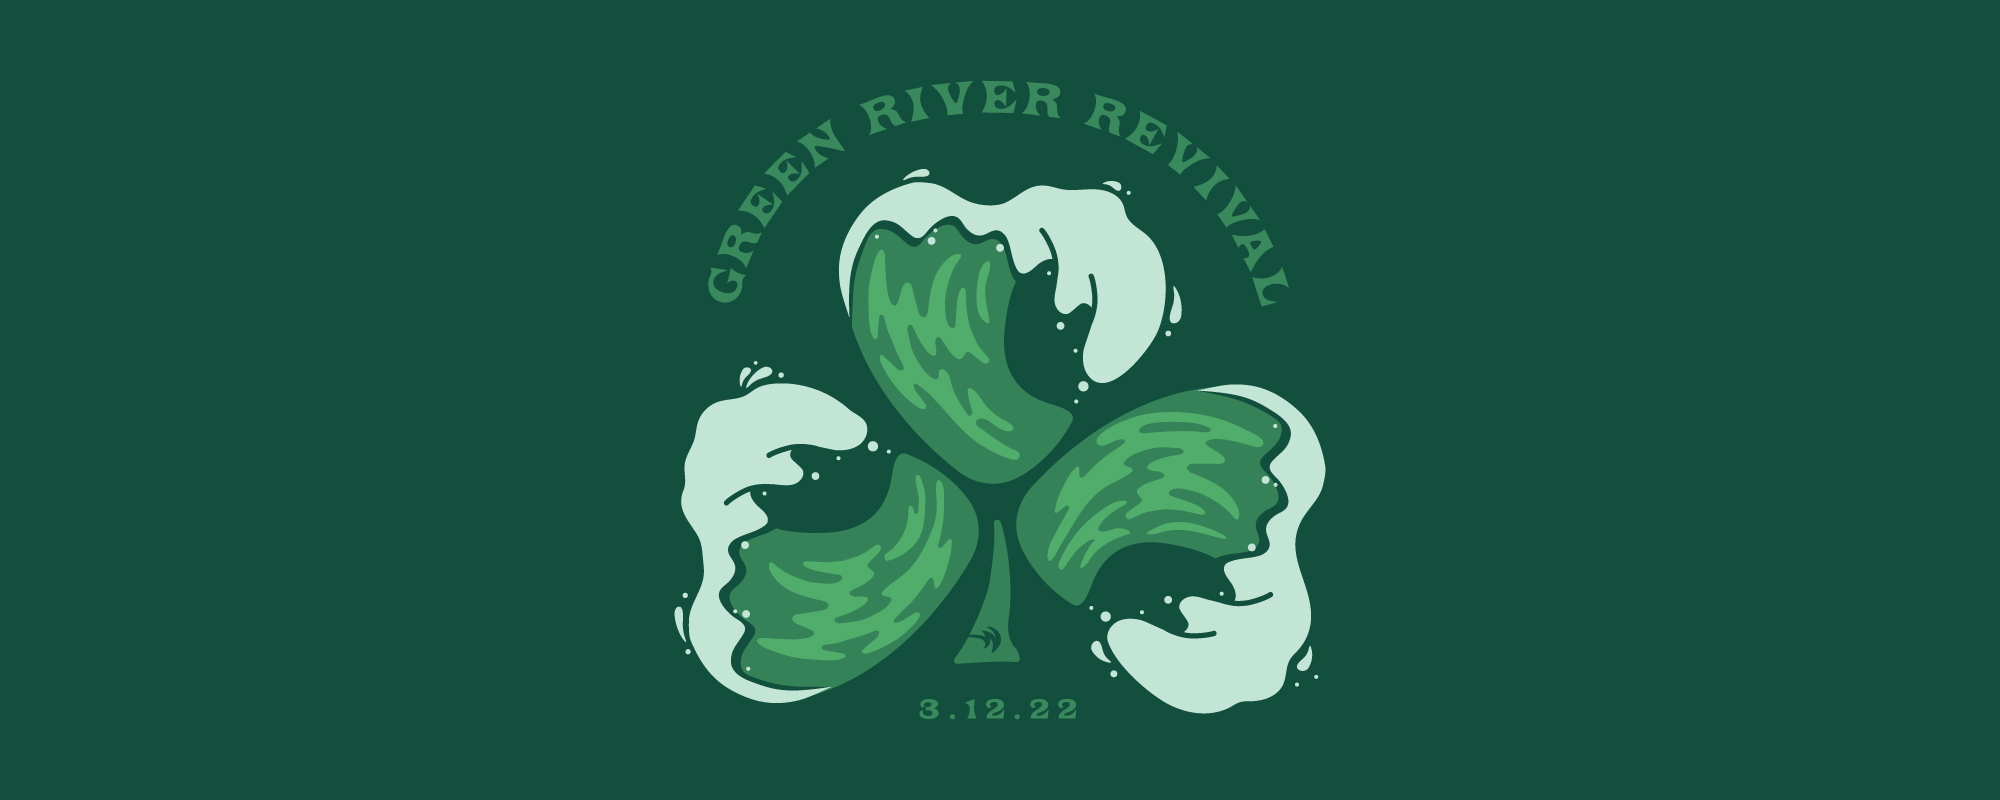 2022 Green River Revival